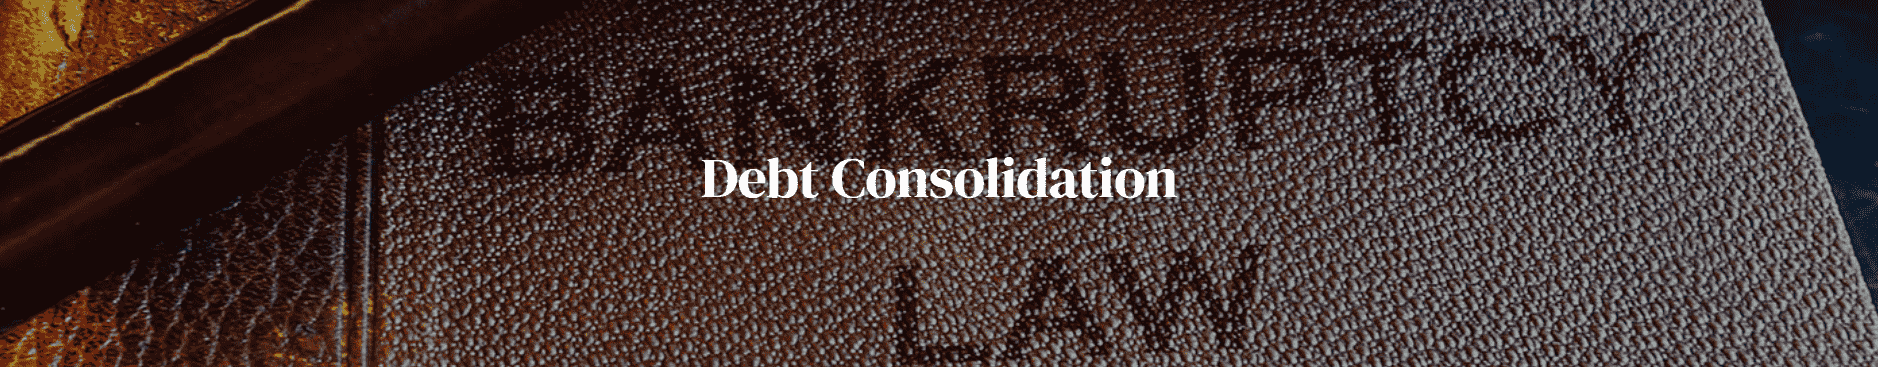 debt consolidation attorneys in mobile, alabama